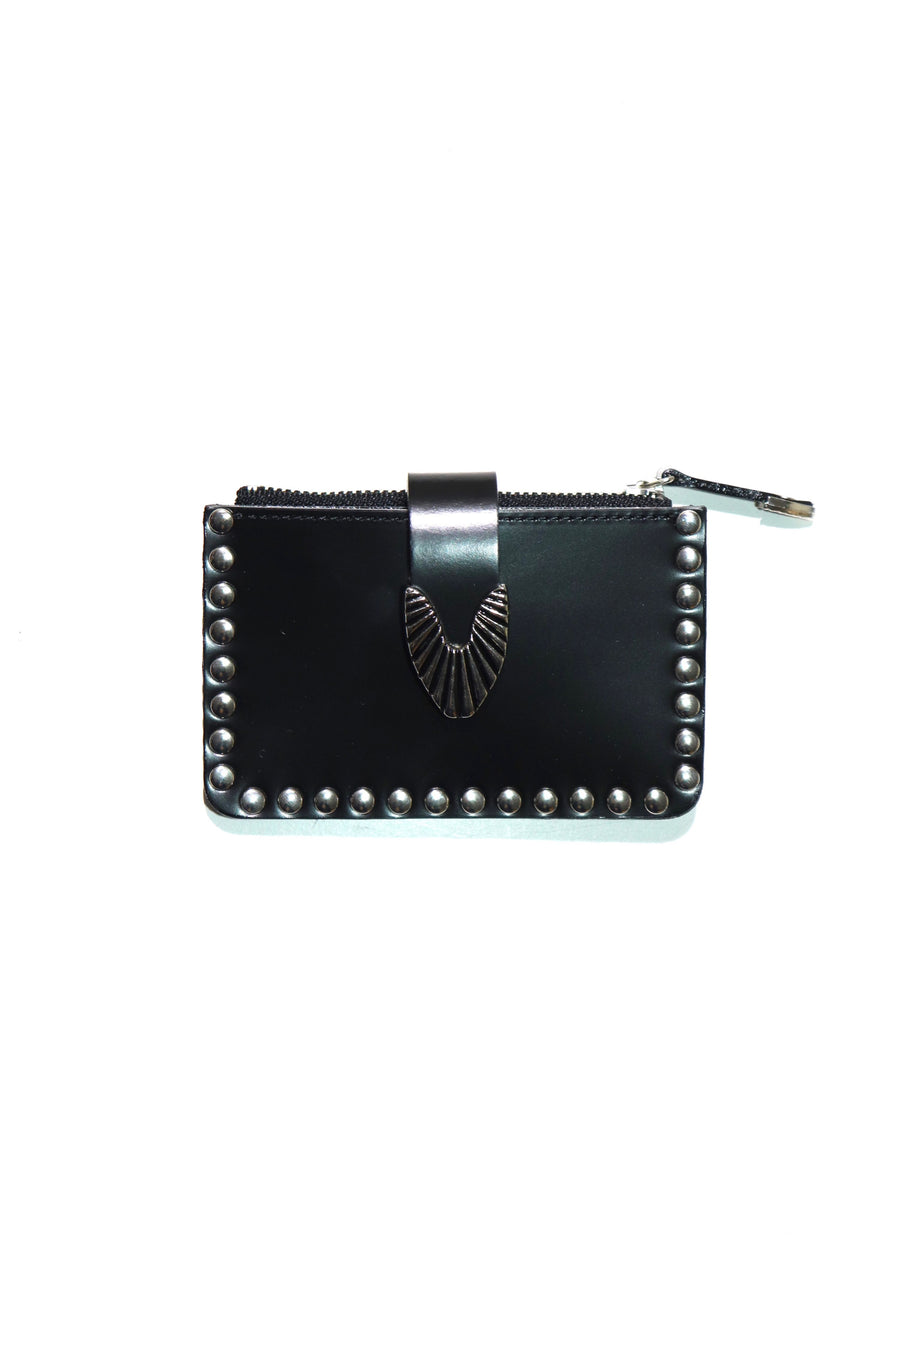 TOGA Virilis (Toga Villilis) 23ss Leather Wallet Studs SMALL Mail